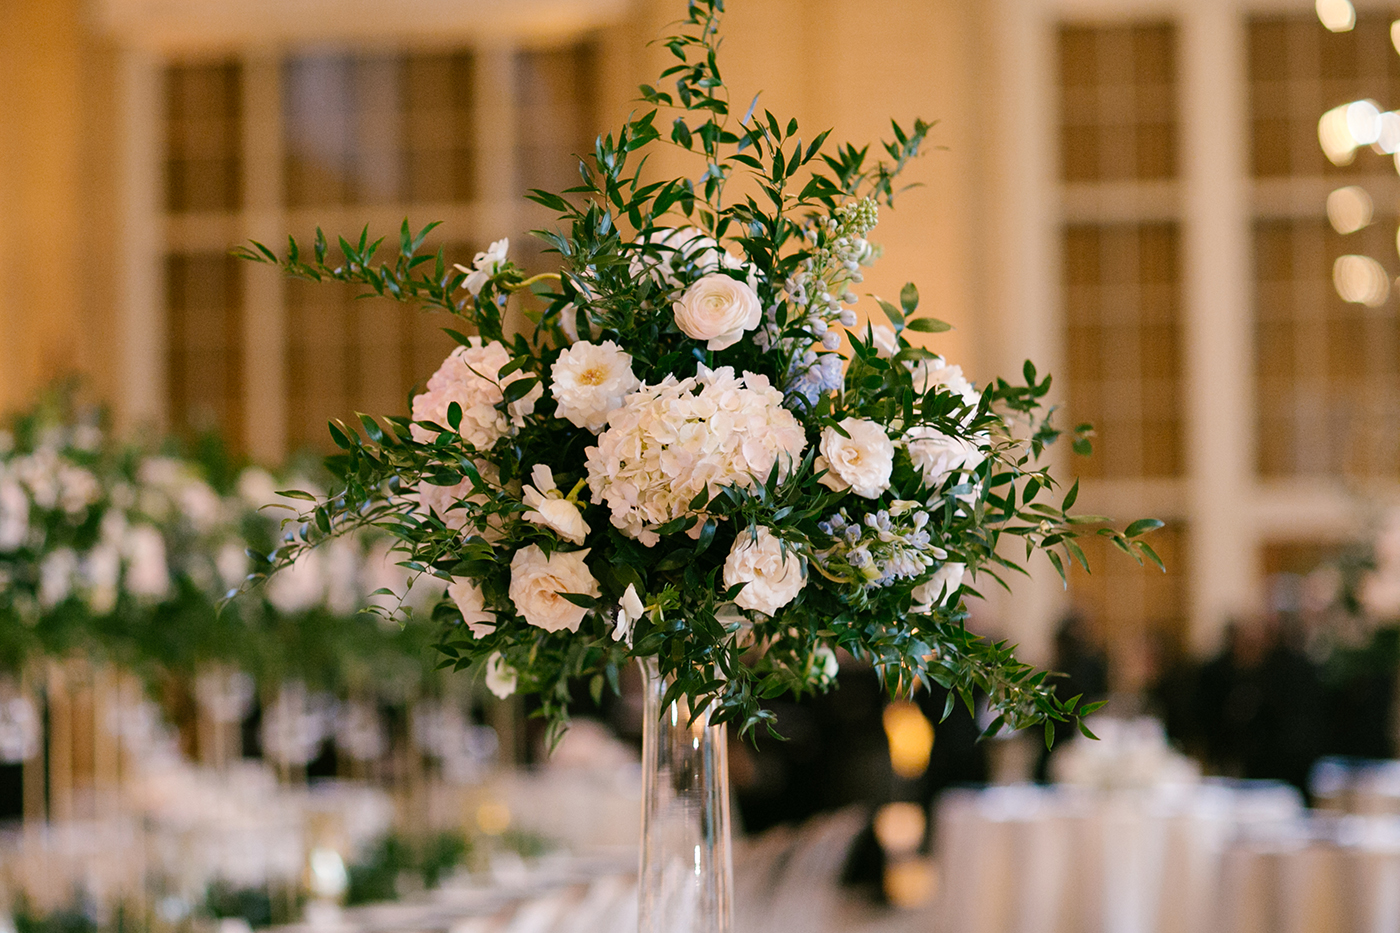 Union Station Wedding Flowers | A Stylish Soiree Dallas: Sarah + Scott